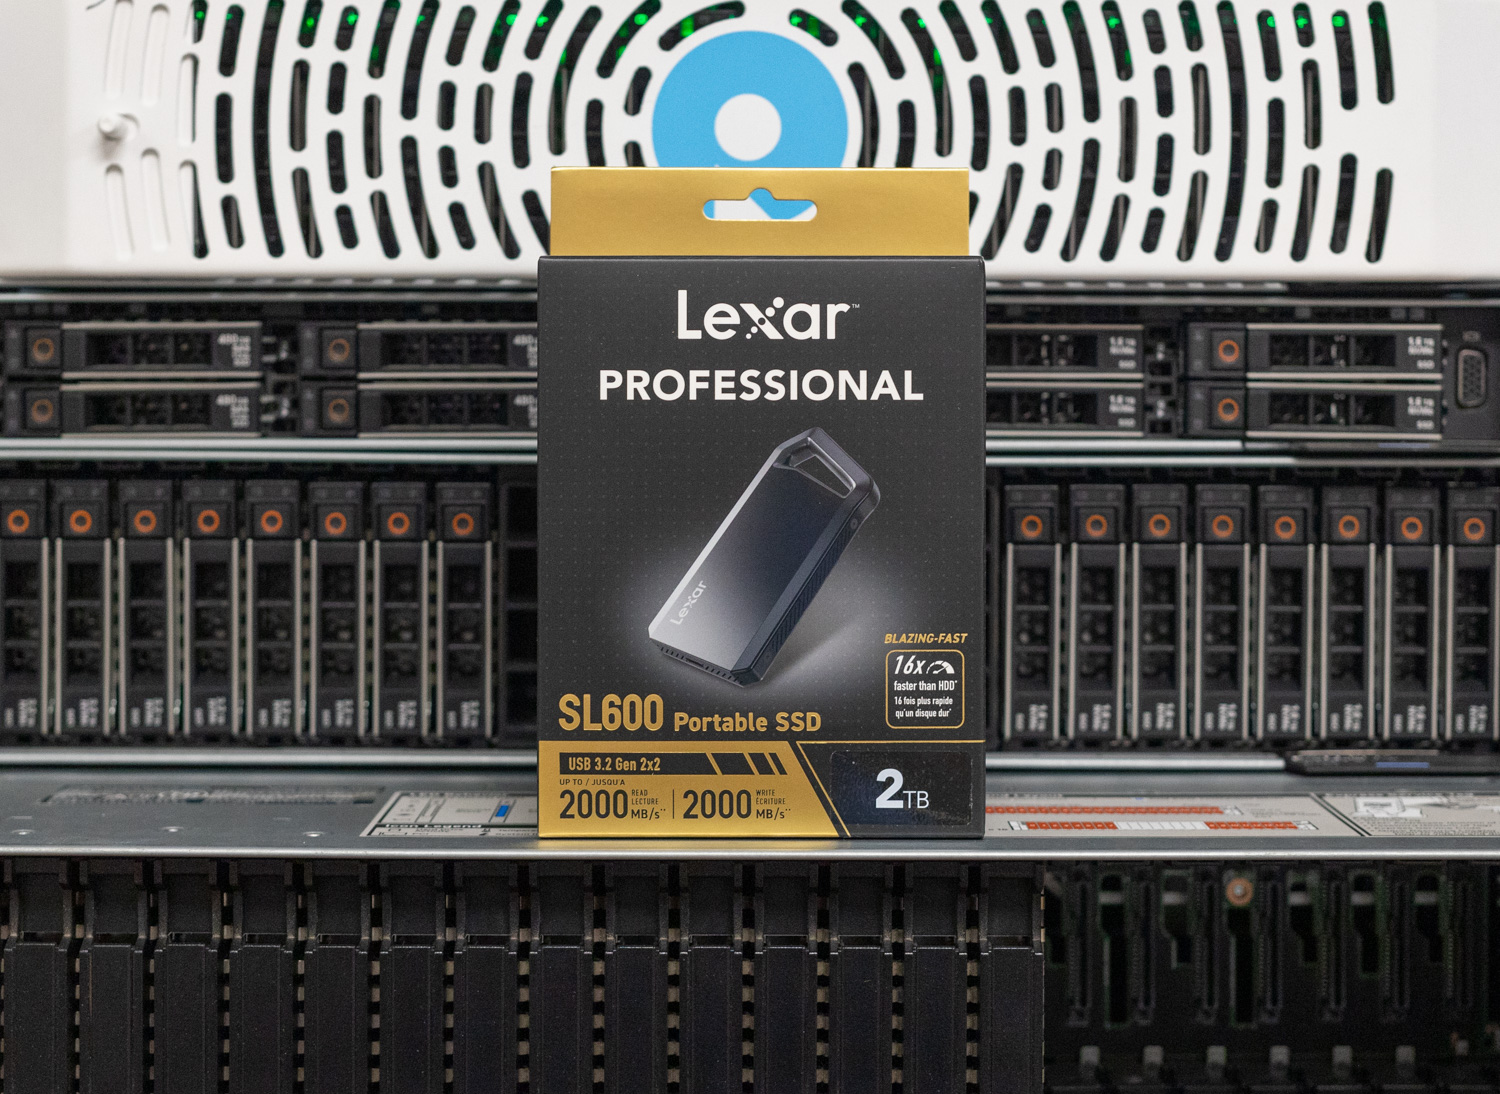 Emballage du SSD portable Lexar SL600